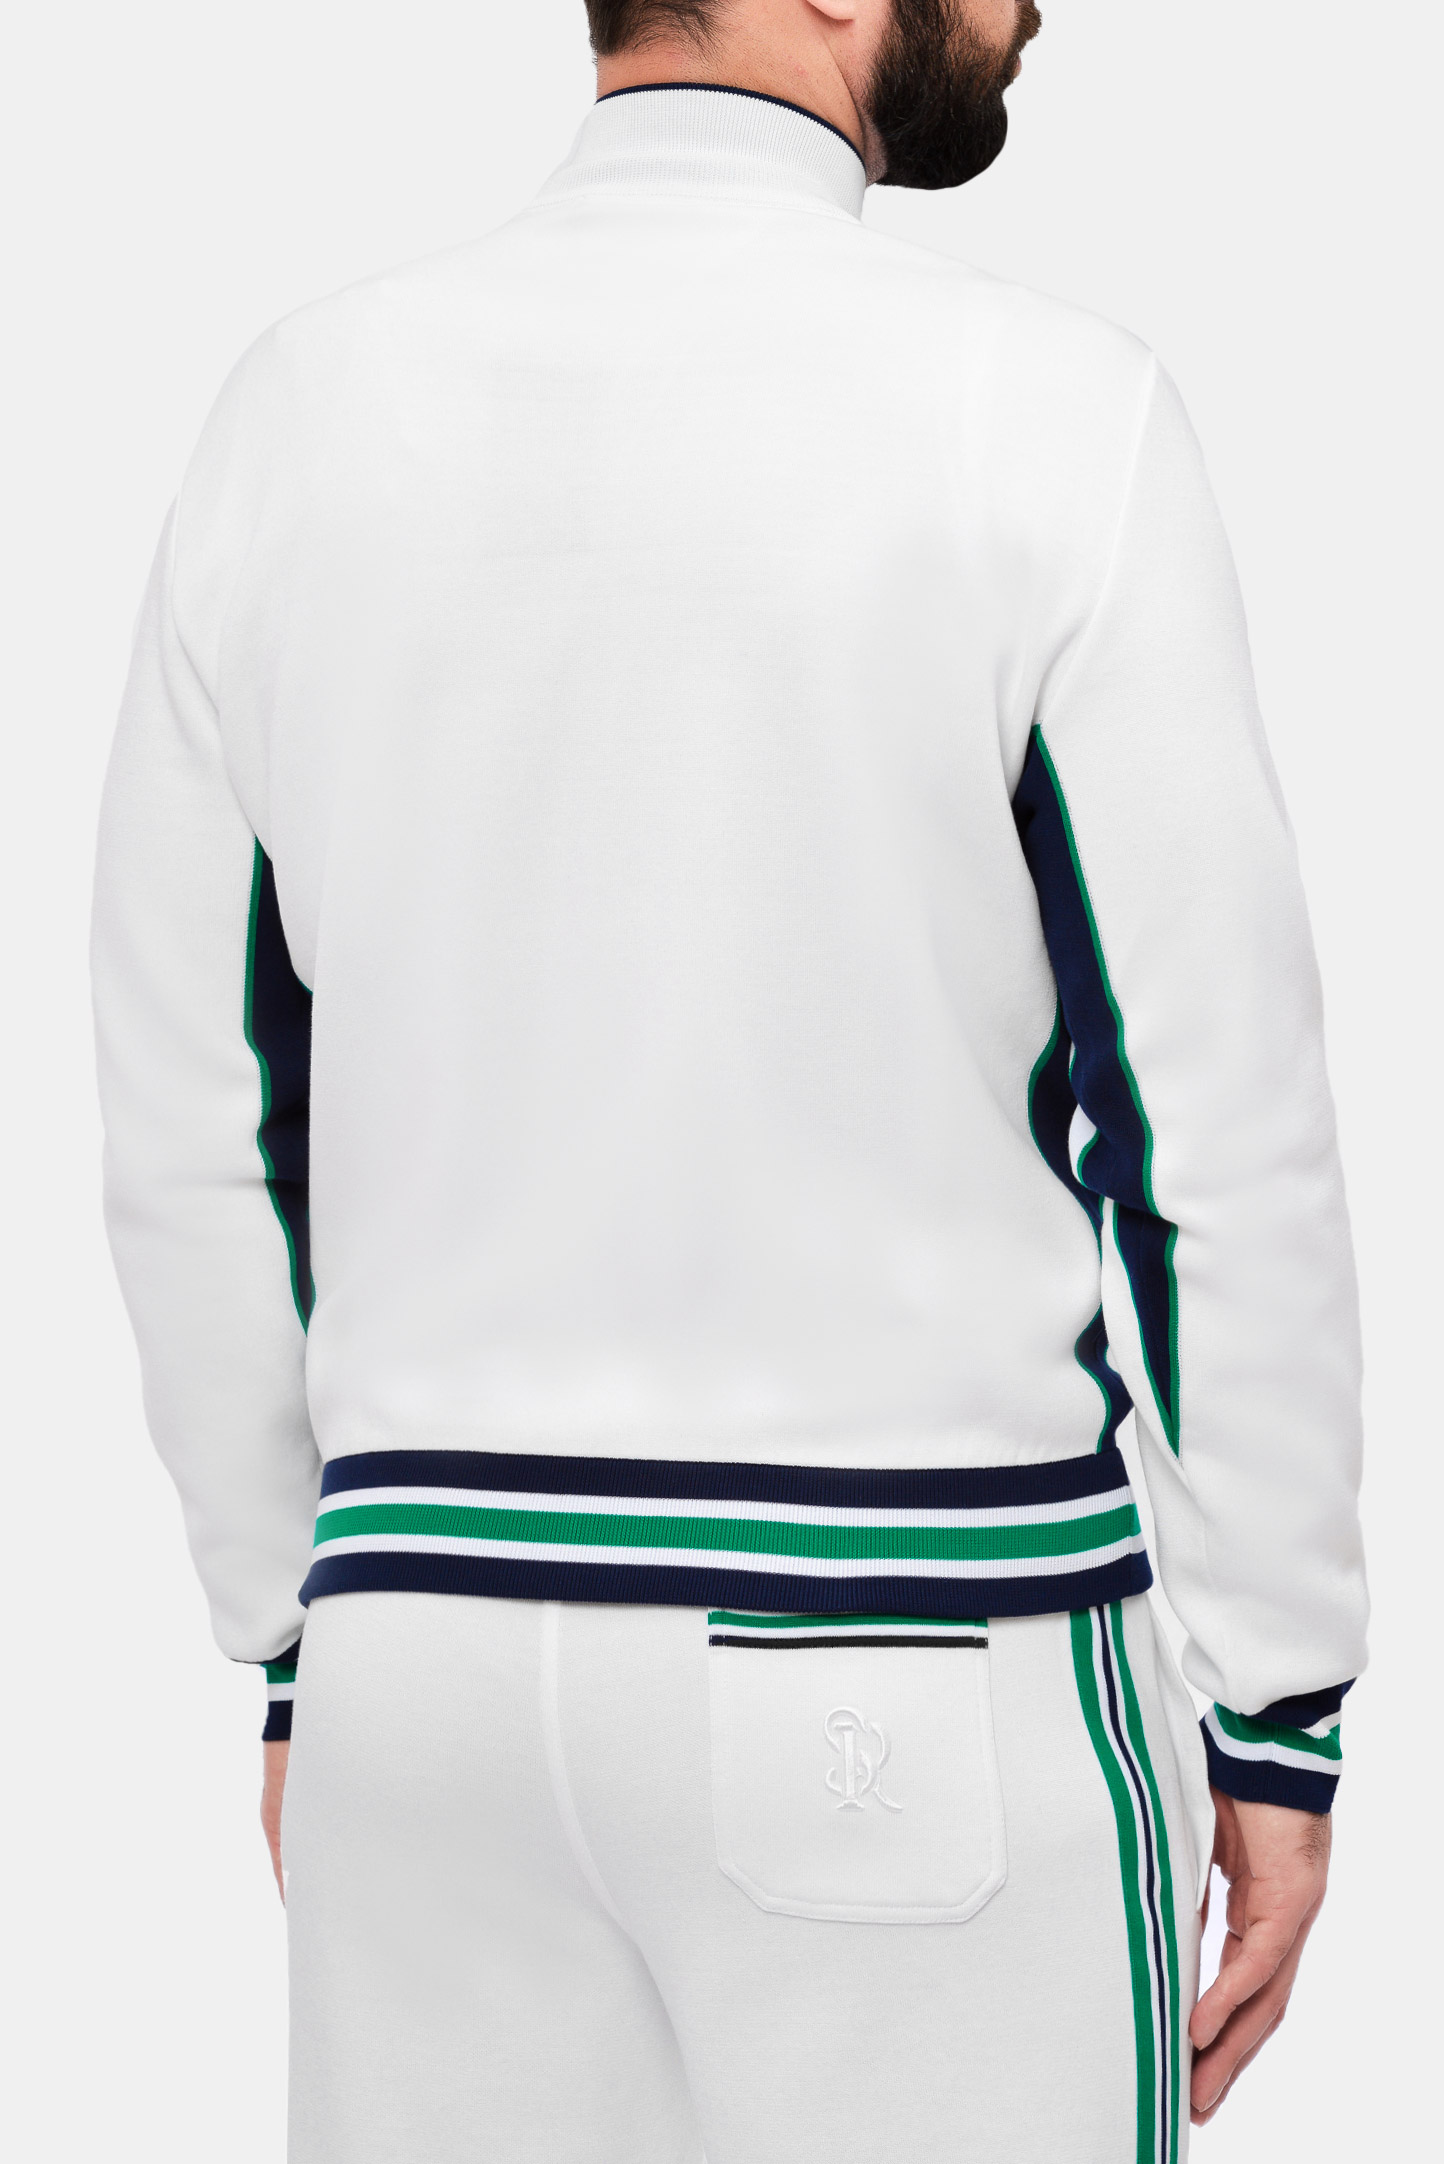 Куртка спорт STEFANO RICCI K616152R31 F20114, цвет: Белый, Мужской